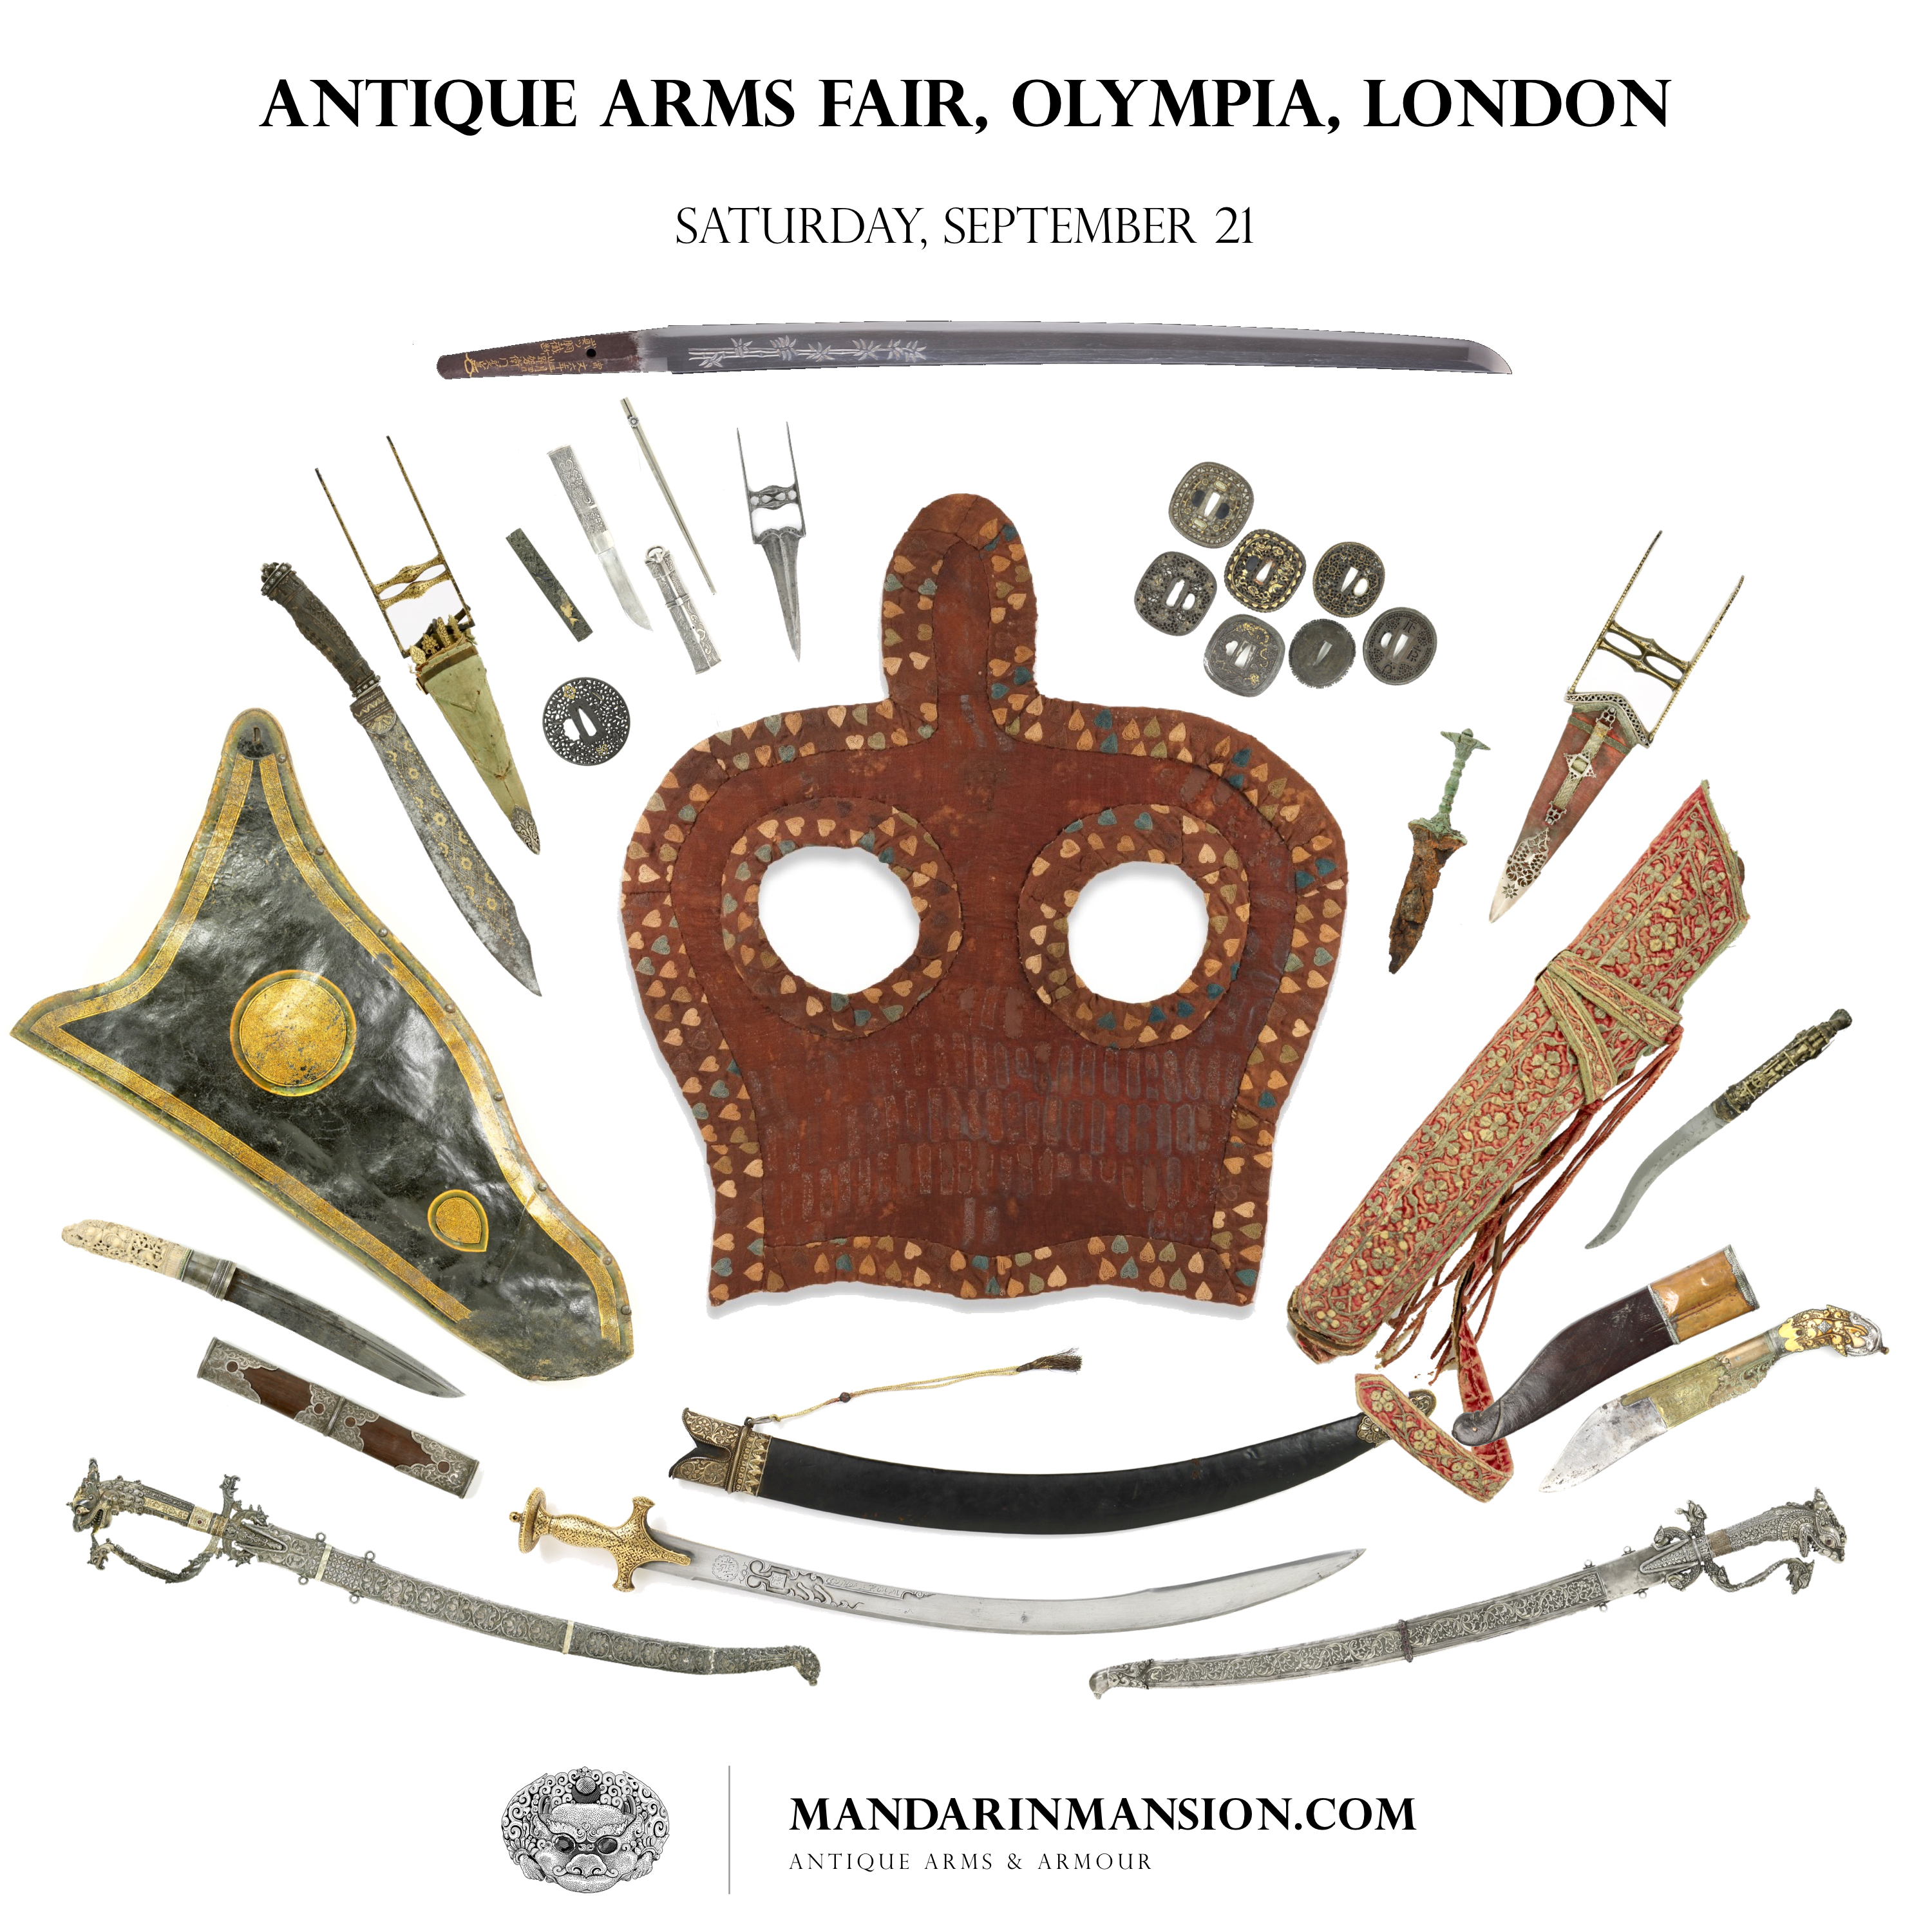 Olympia Arms Fair promotion